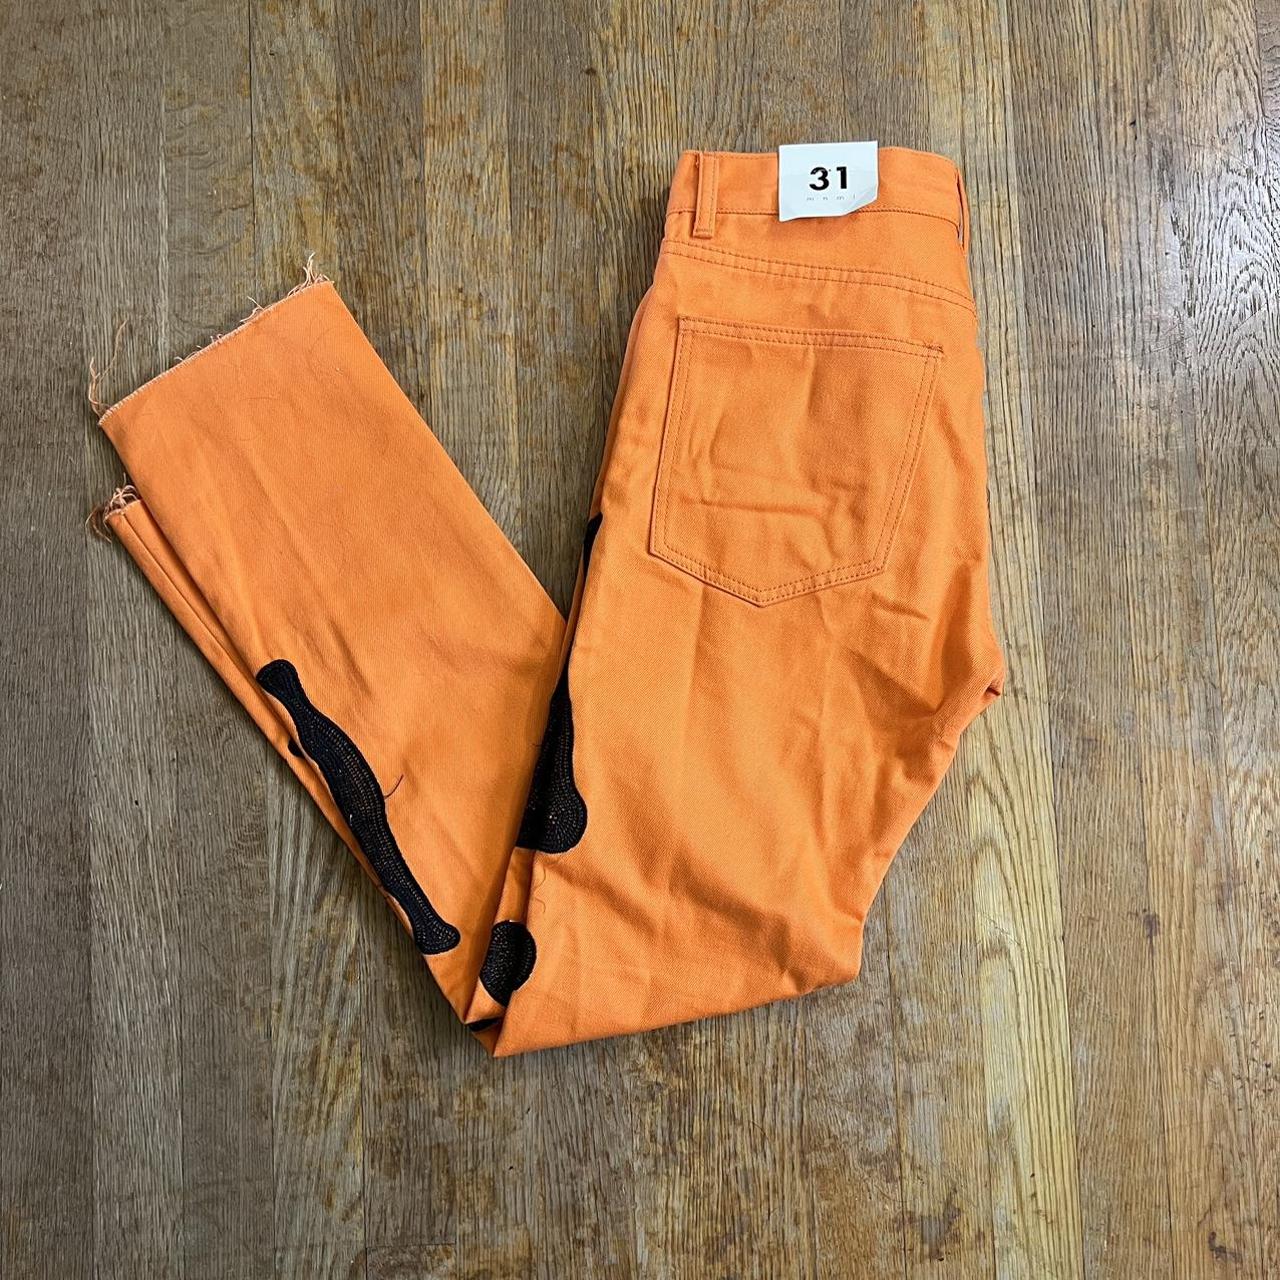 mnml orange skeleton jeans size 31. new with tags.... - Depop